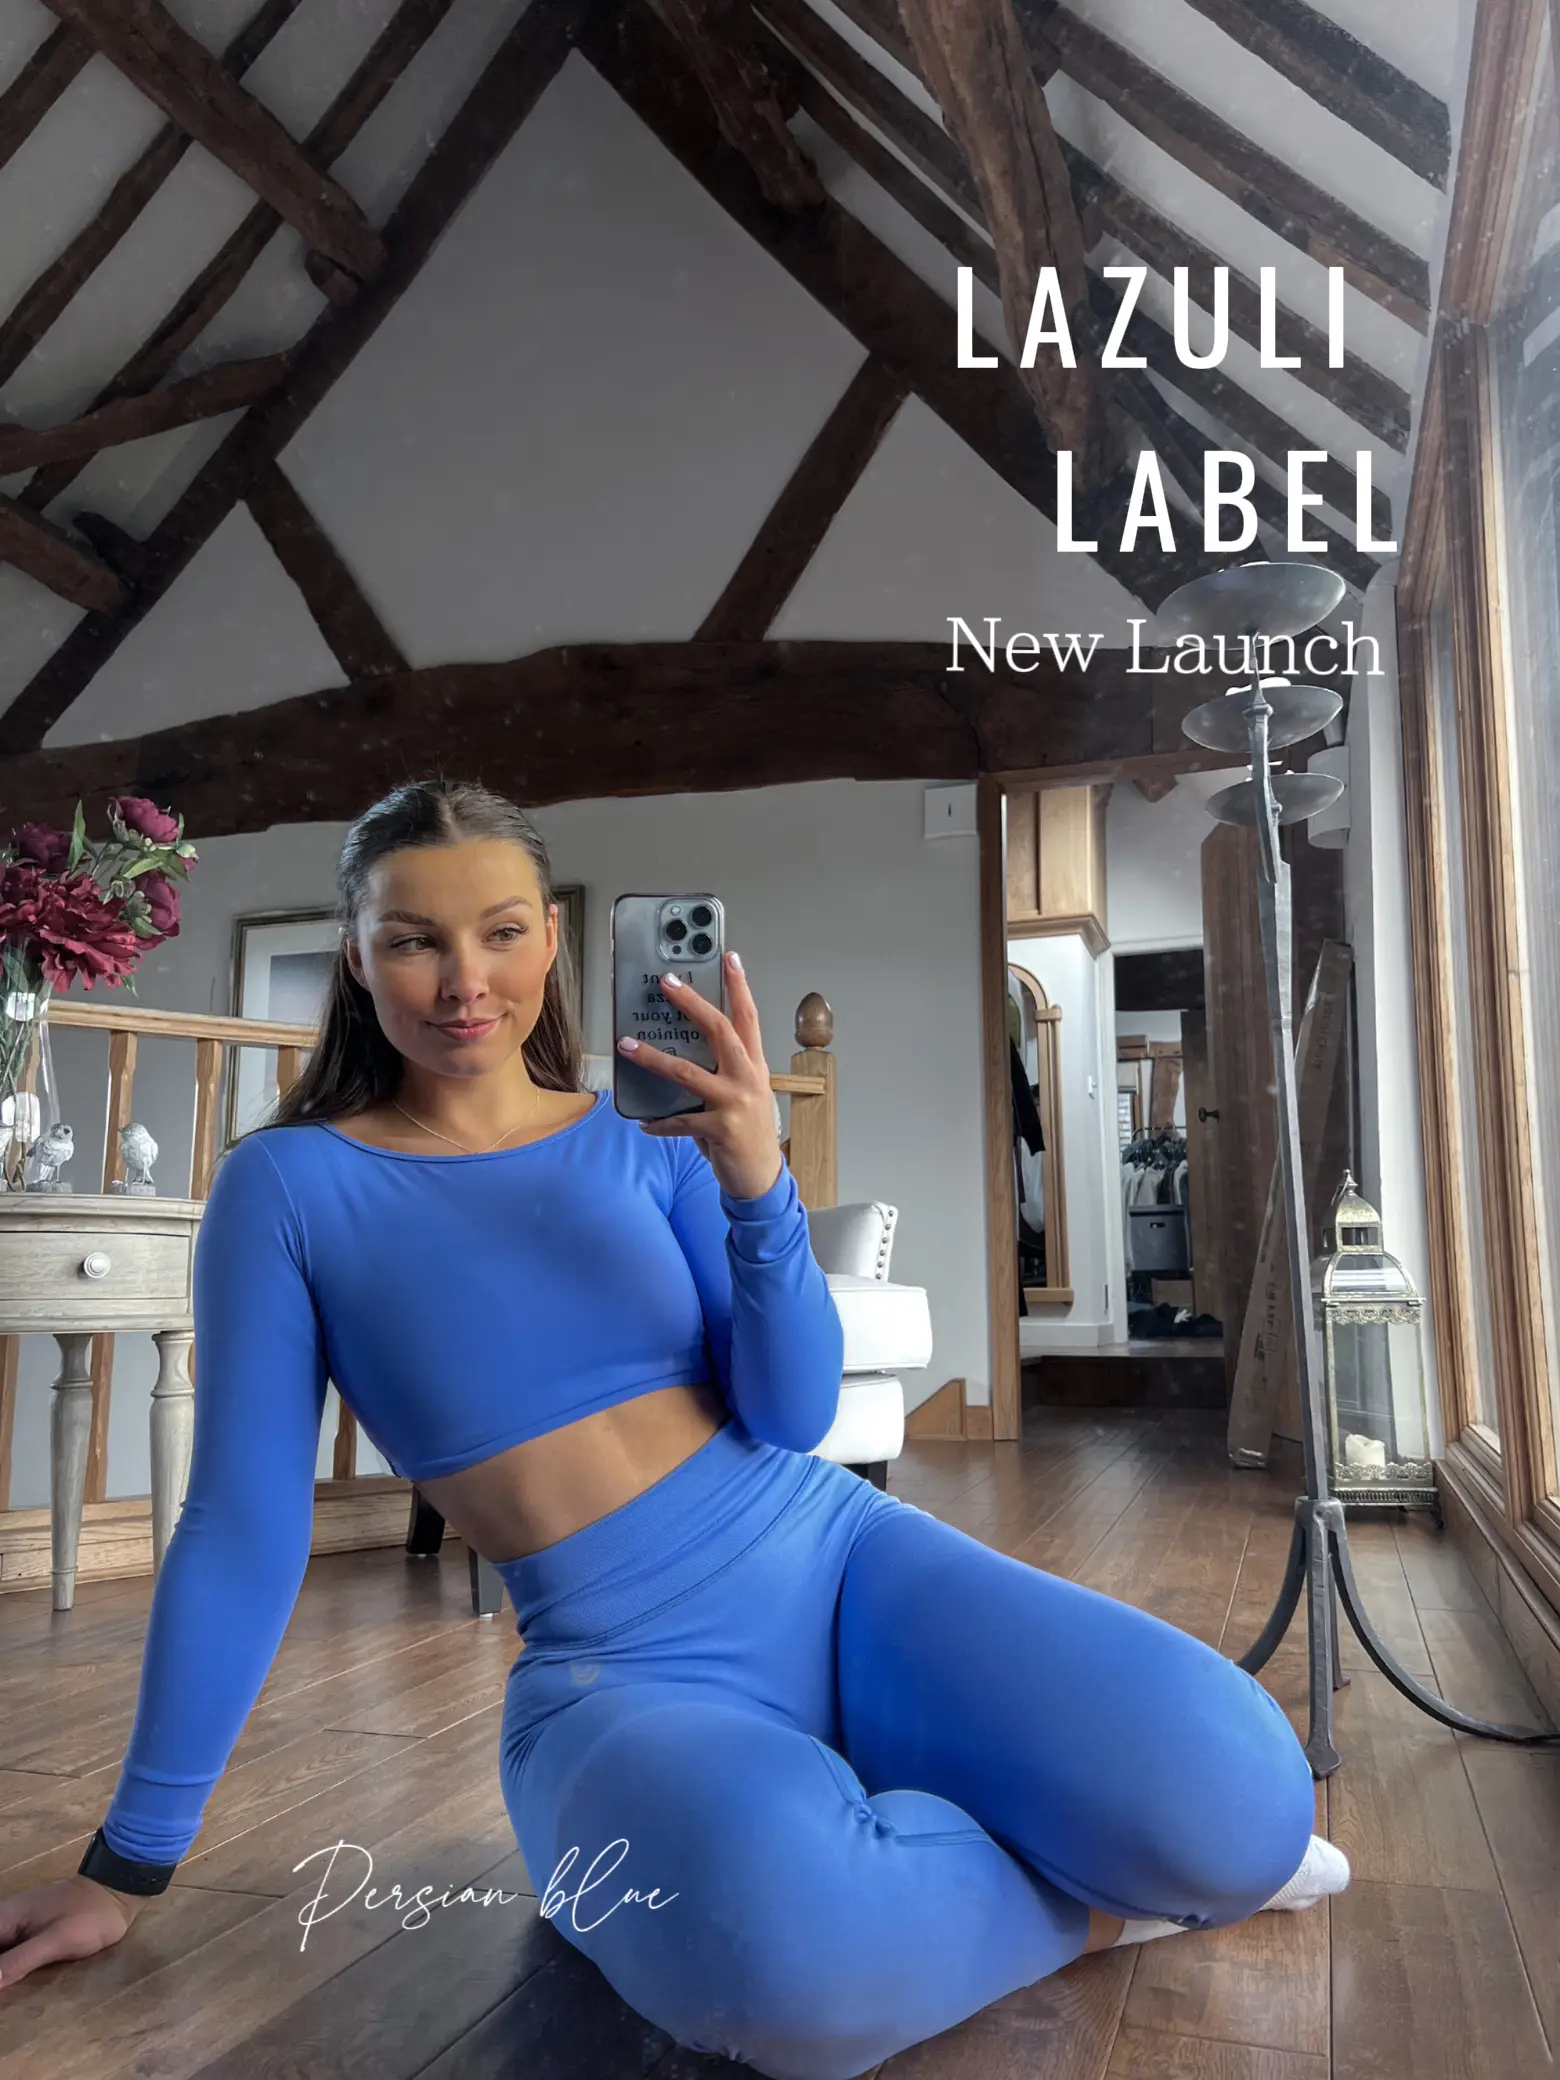 Lazuli Label